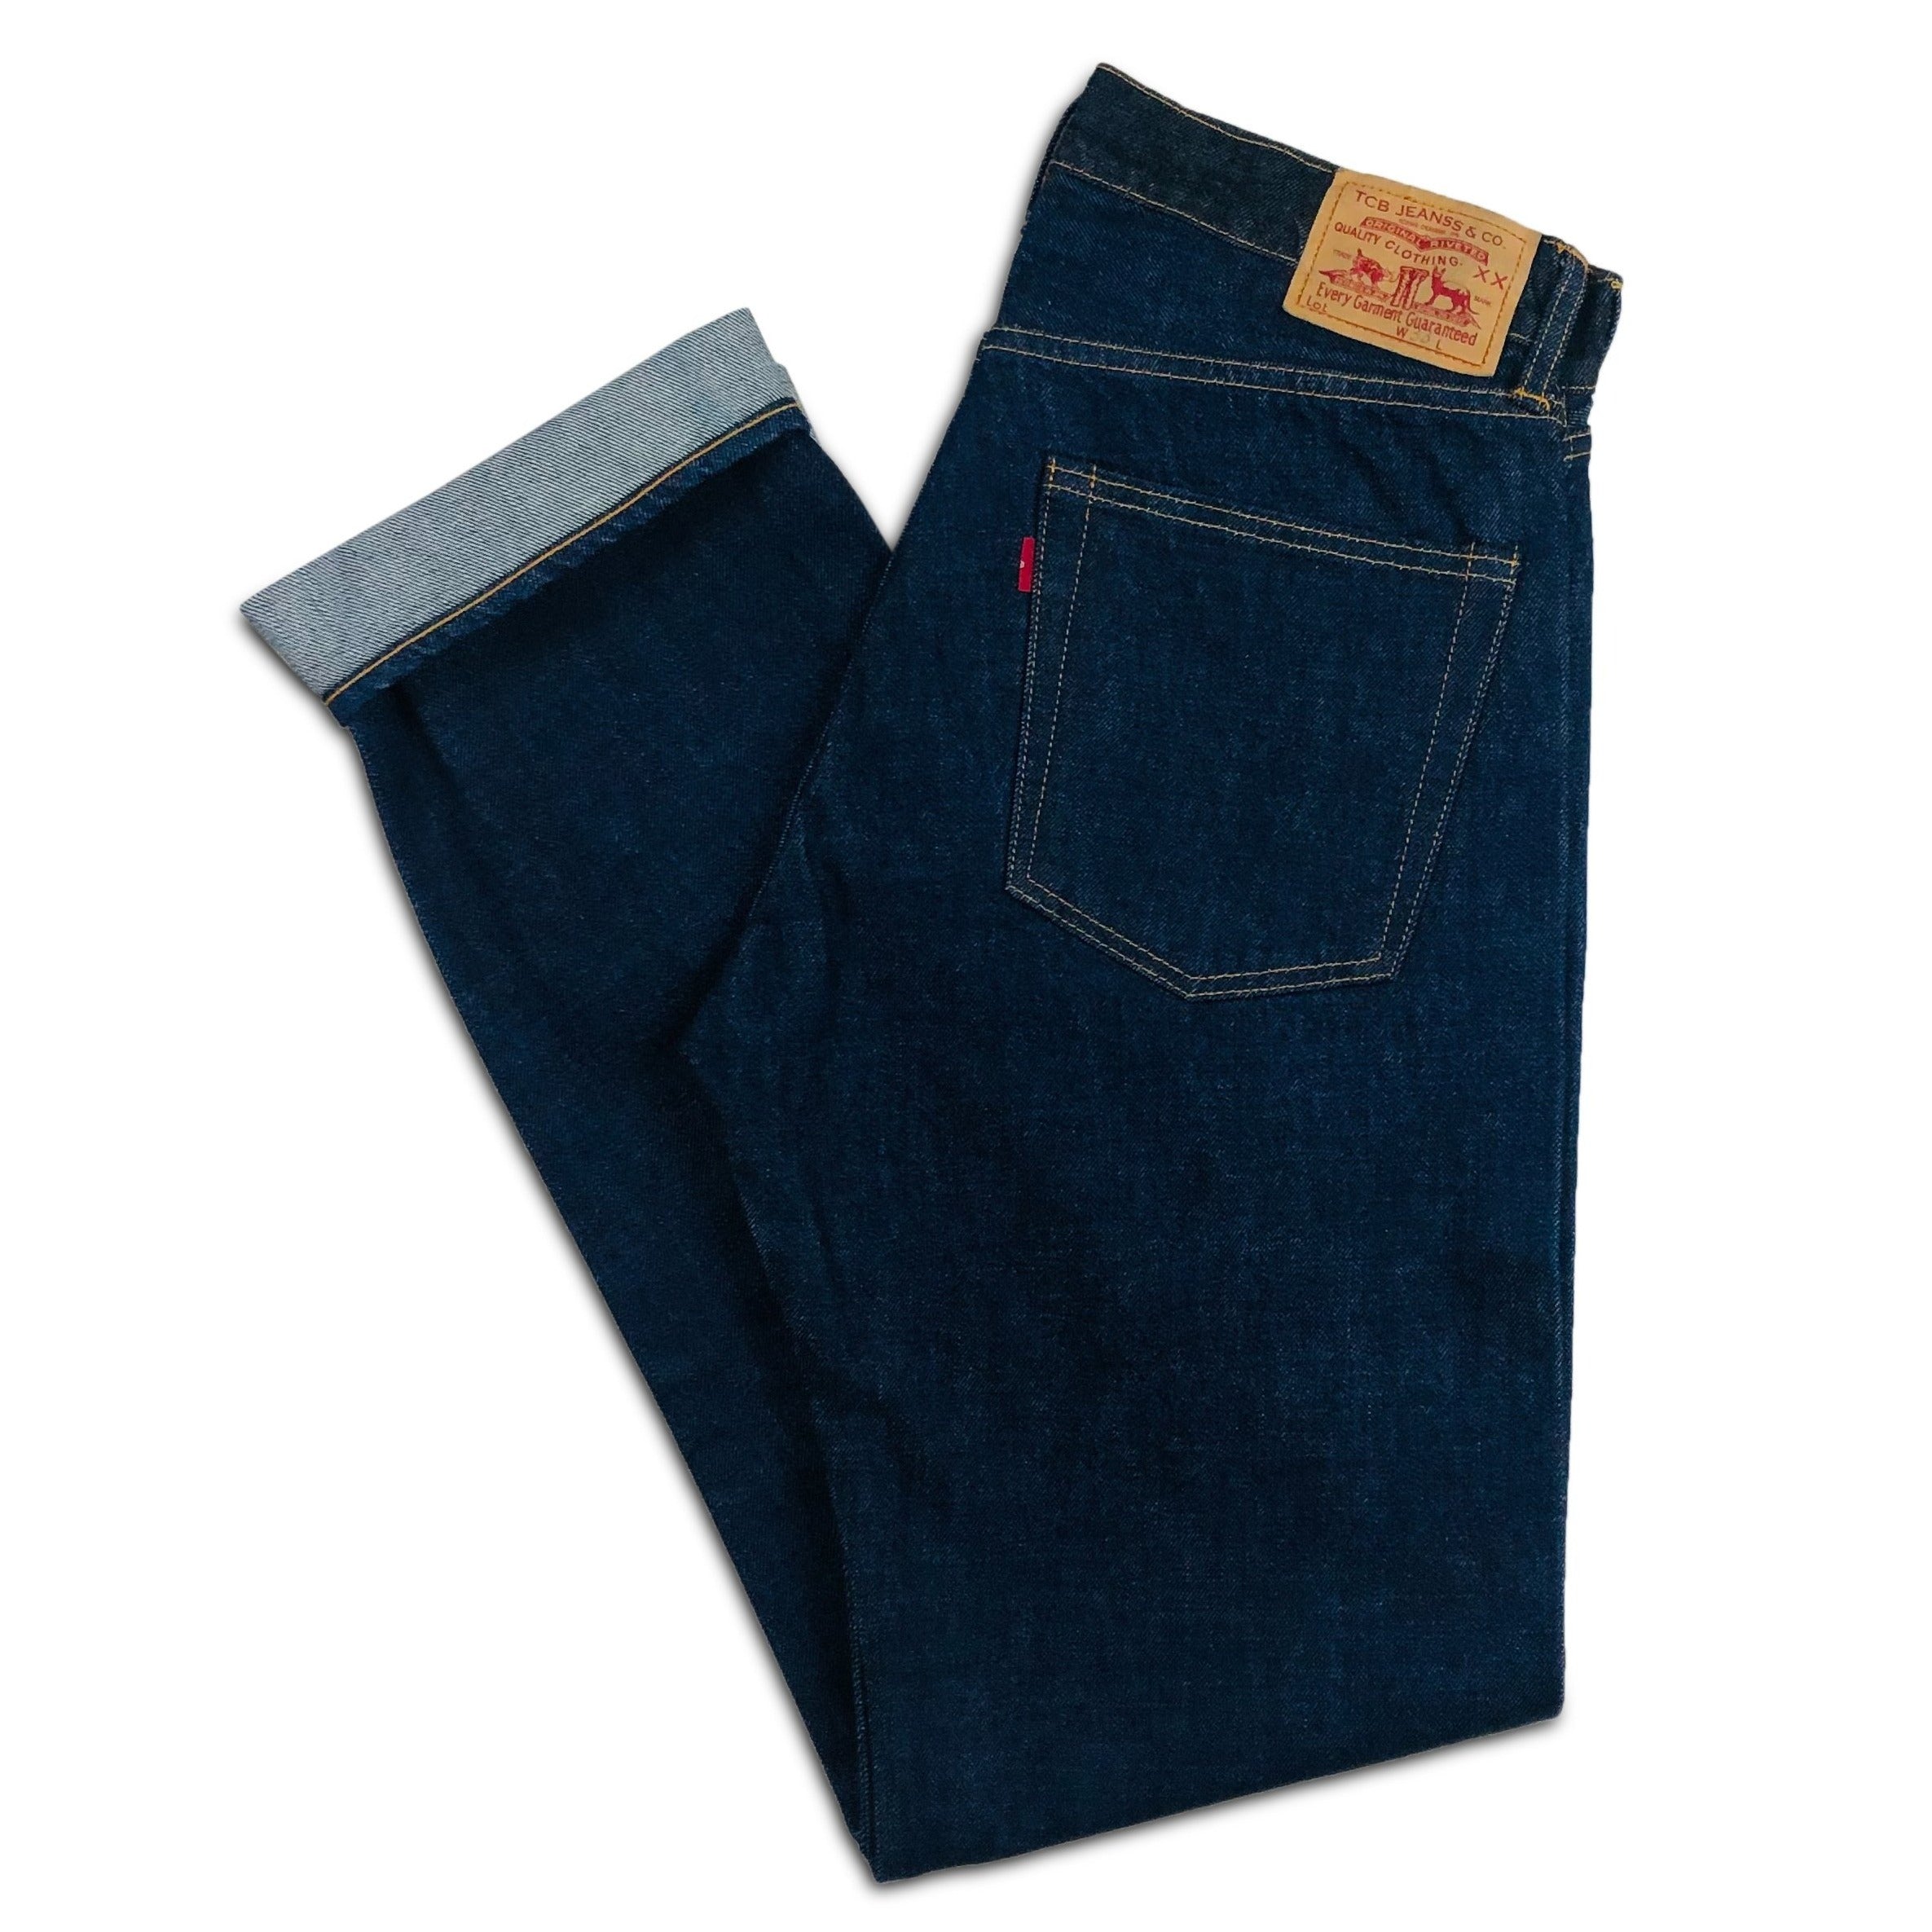 TCB Jeans '505' 13oz. Japanese Selvedge Jeans (Slim Cut)